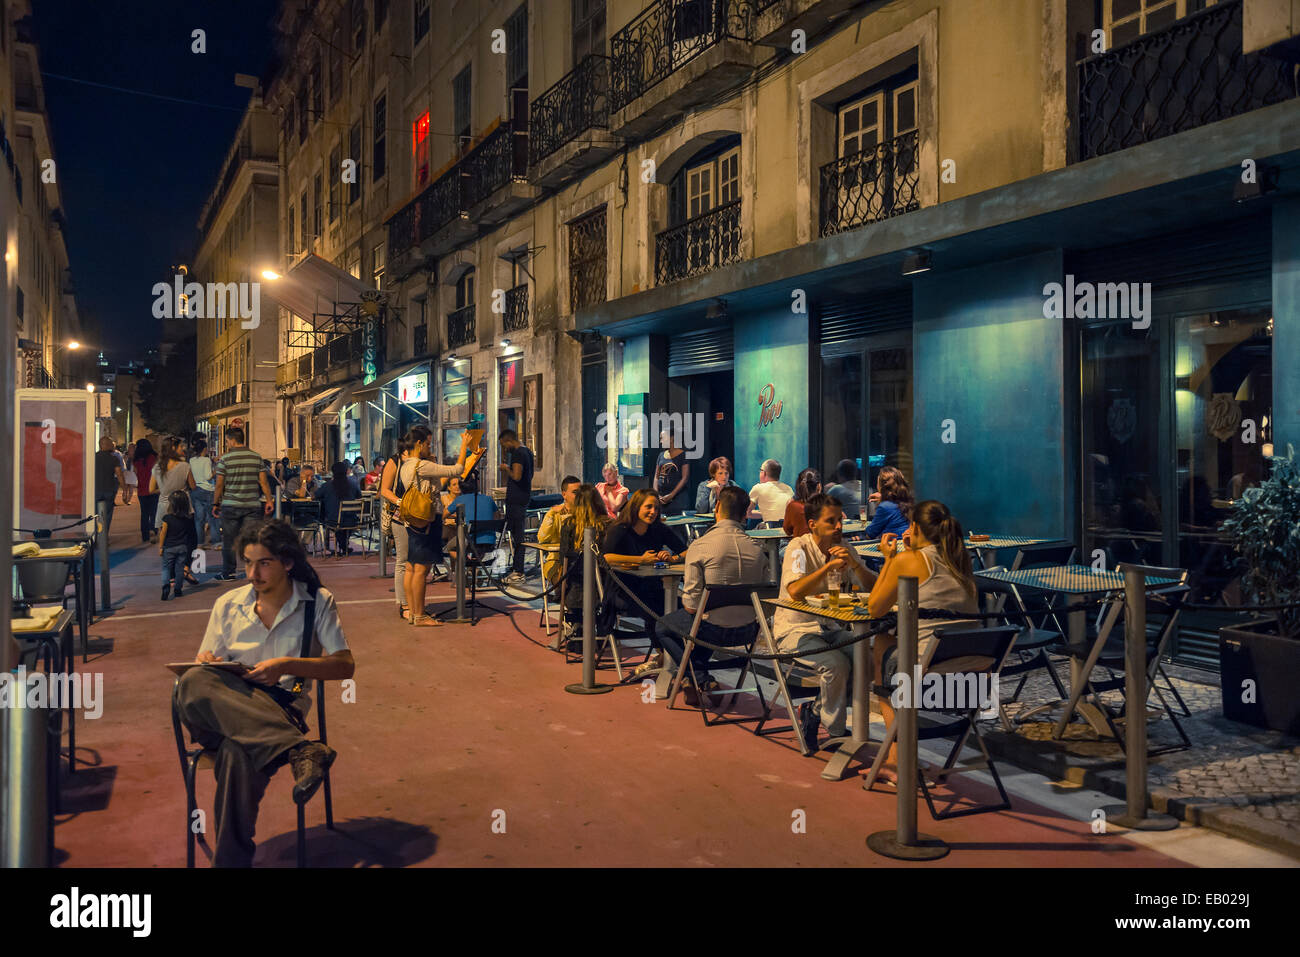 Restaurants at night in Rua Nova do Carvalho, Cais do Sodre district, Lisbon, Portugal Stock Photo